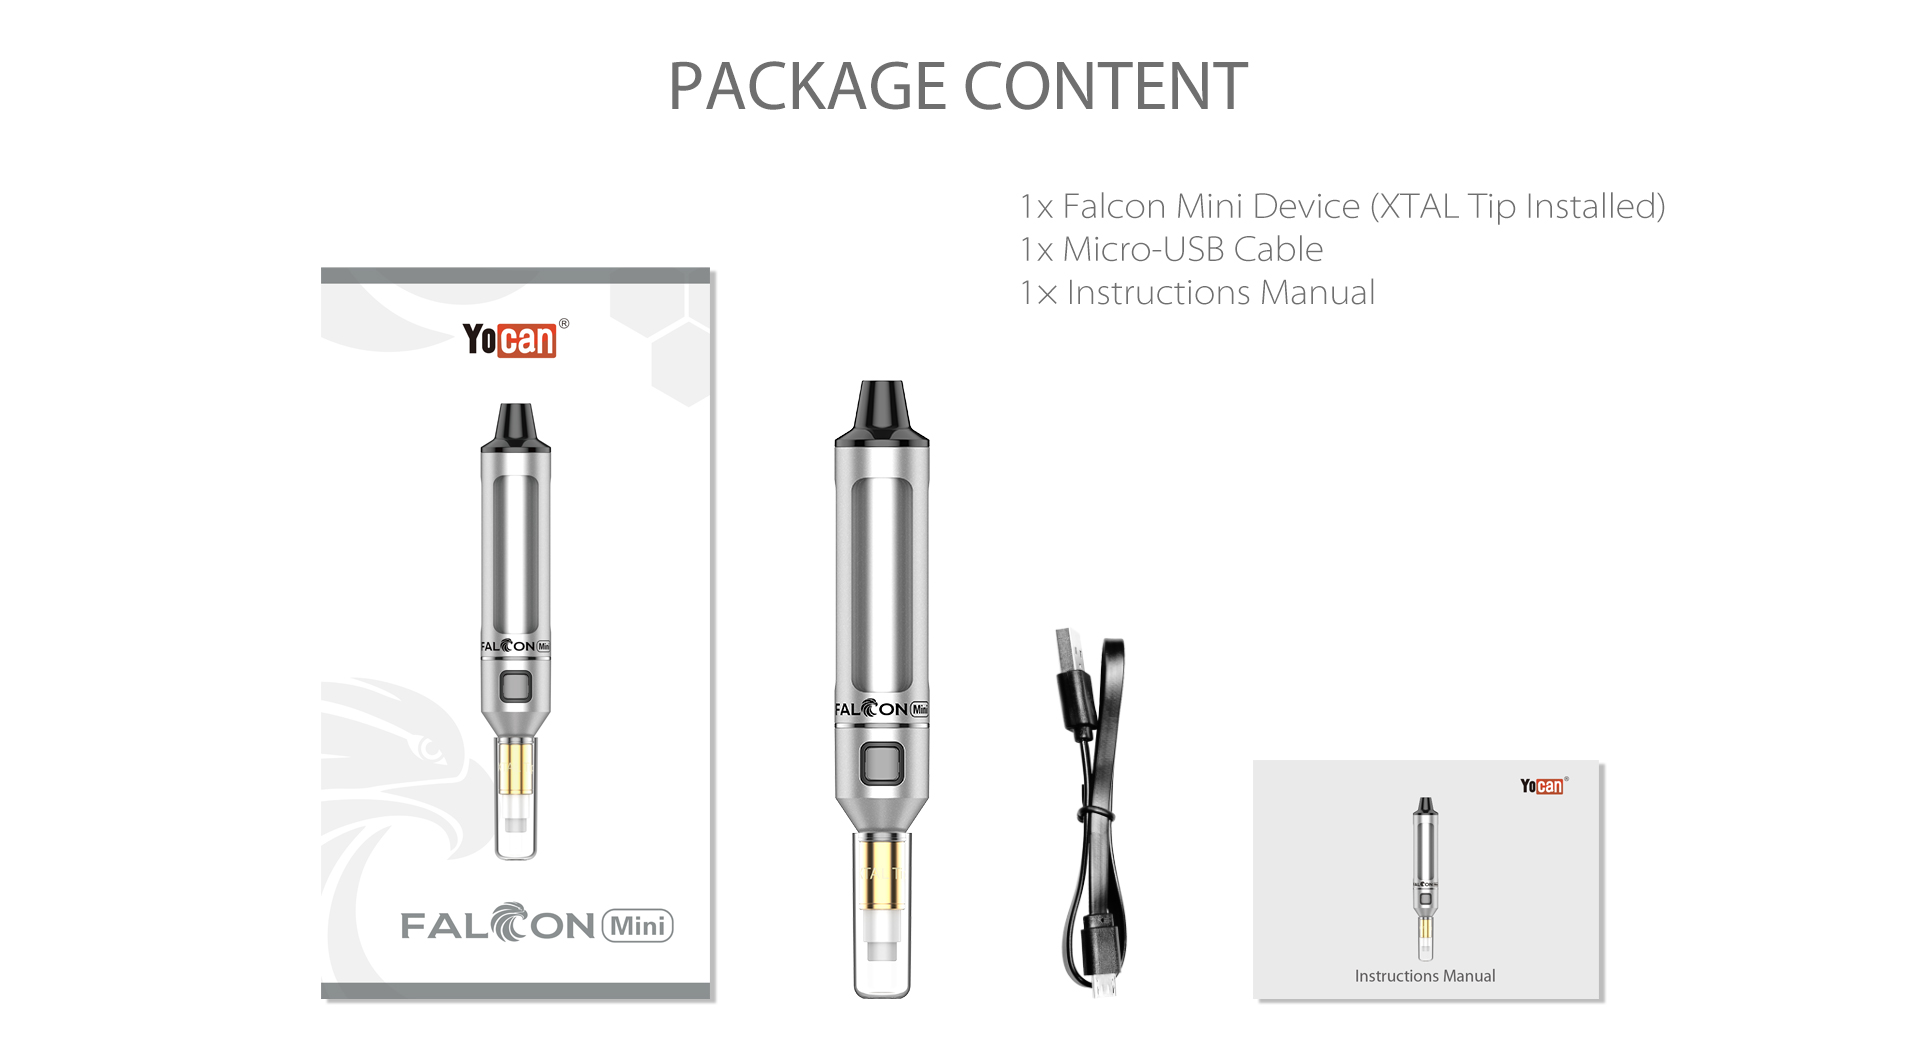 Yocan Falcon Mini Vaporizer Pen package content.